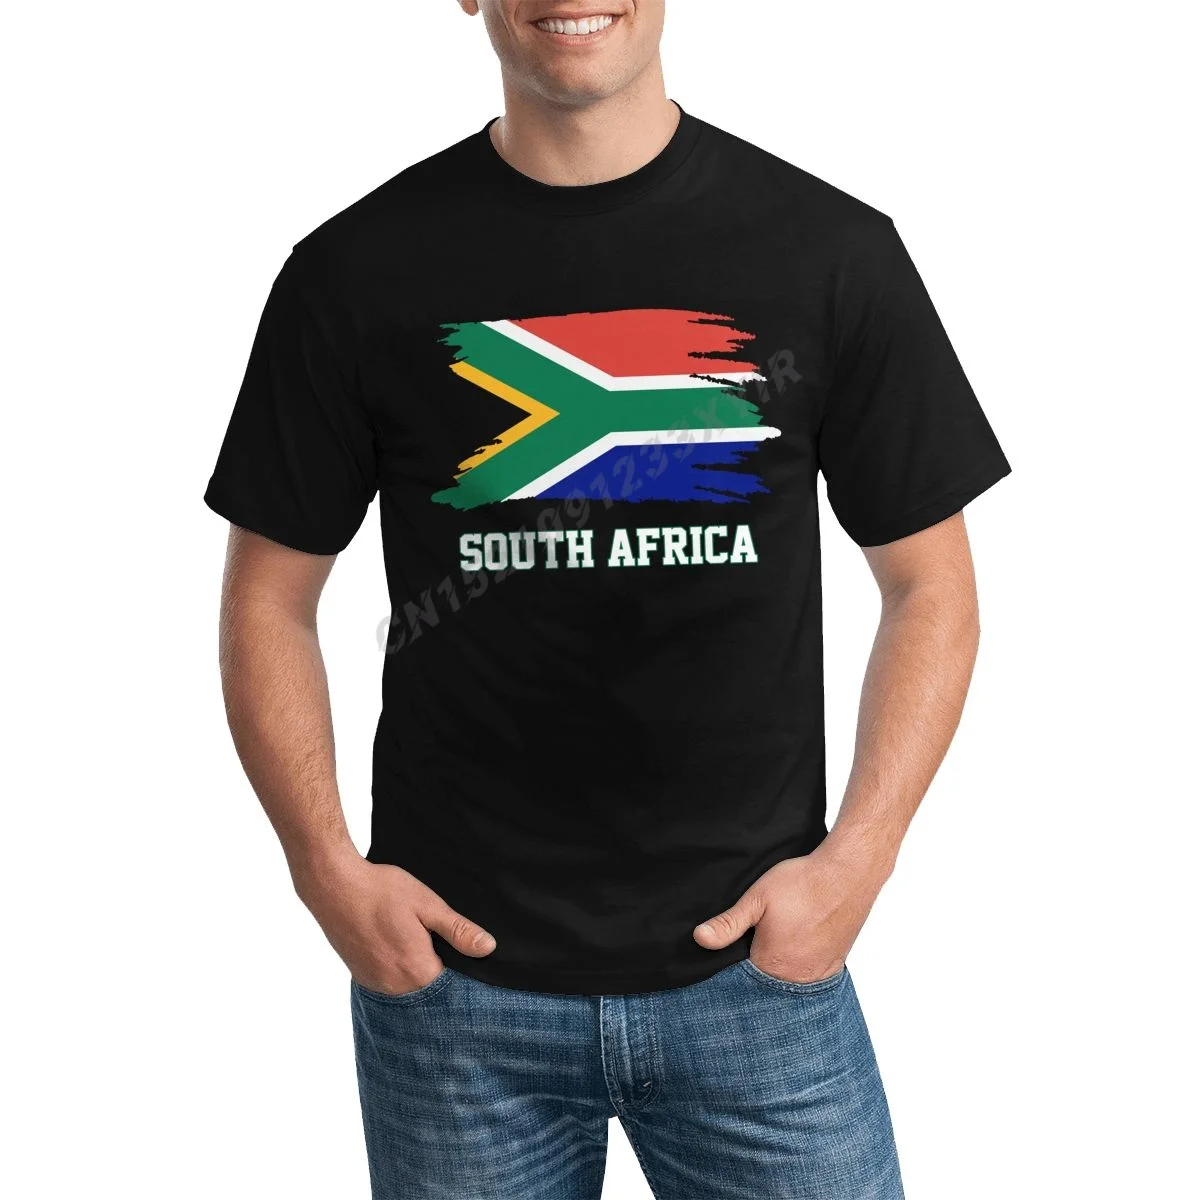 Men T-shirt South Africa Flag Cool South African Fans T Shirt Men's tee 100% Cotton XS-5XL O-neck Tshirt Fashion Short Sleeve